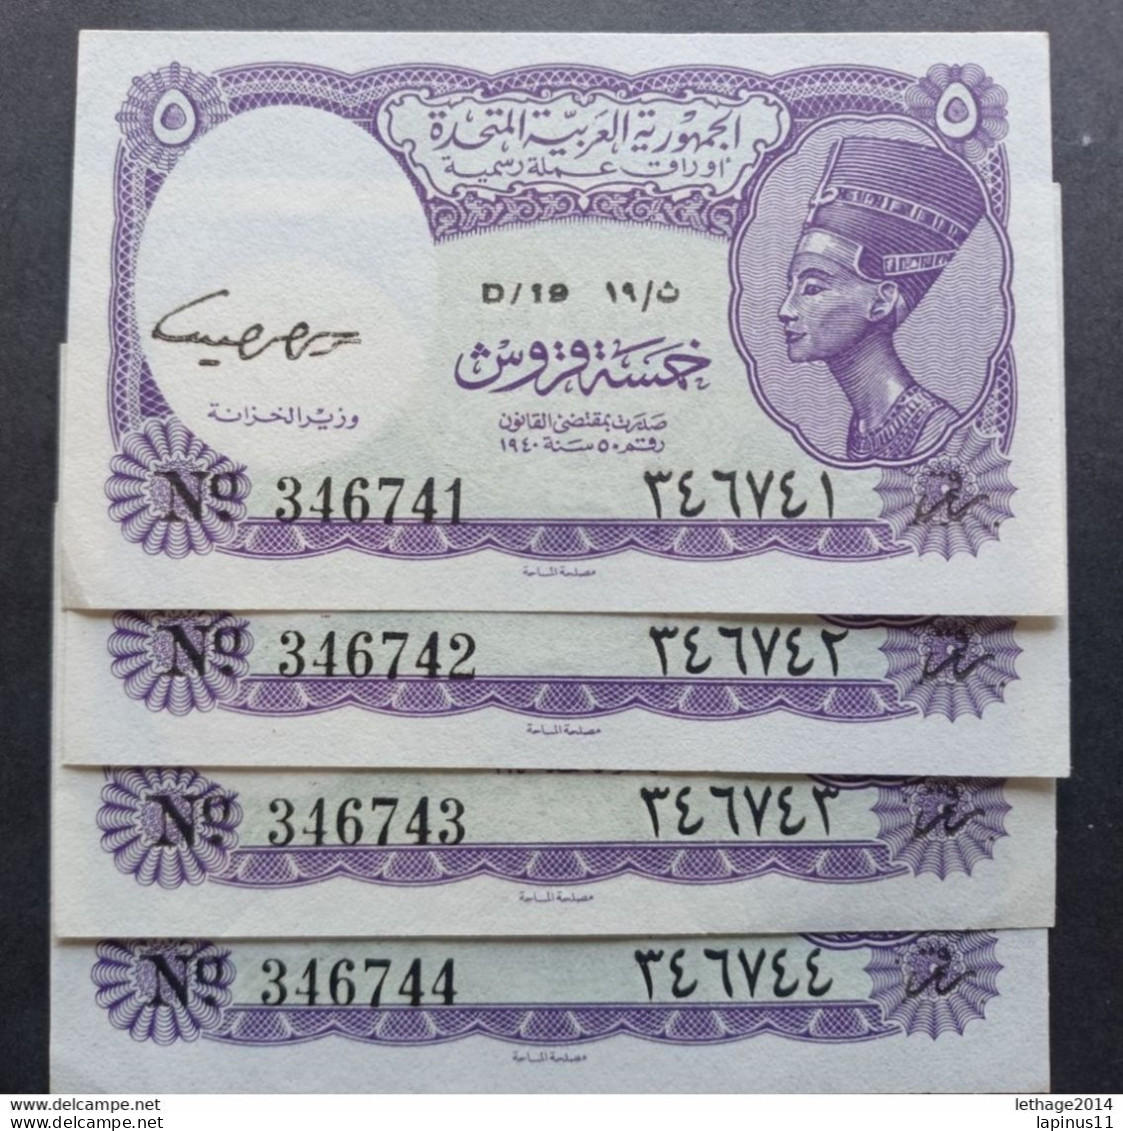 BANKNOTE EGITTO 5 P 1940 UNCIRCULATED SEQUENTIAL NUMBERS PARTIAL SIGNATURE DECAL 4 ERROR NUMBER 4 SERIAL BROKEN - Egipto